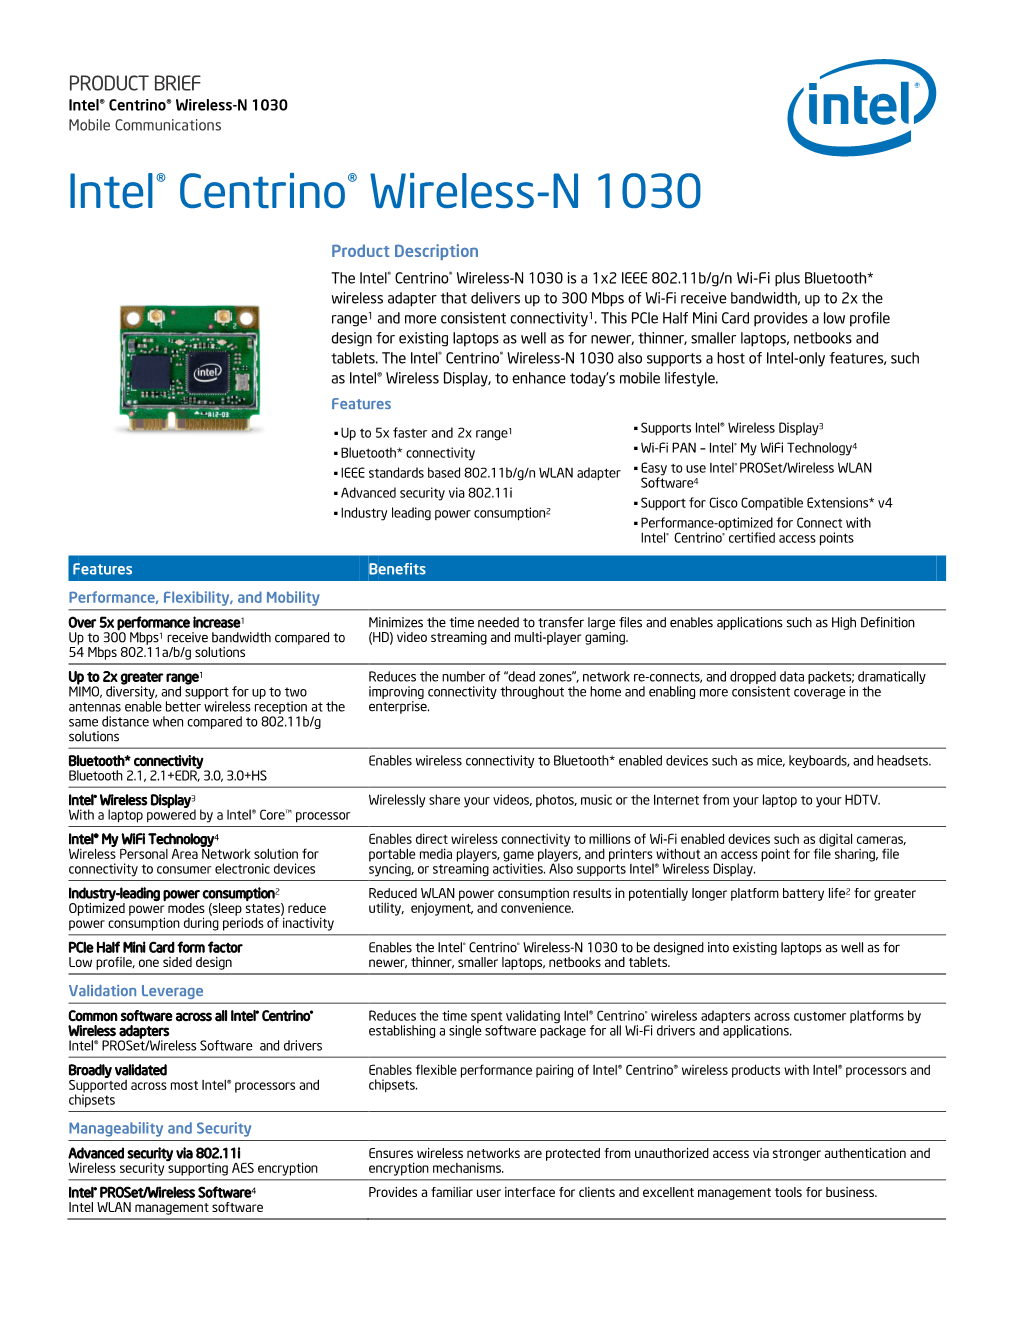 Intel Centrino Wireless-N 1030 Product Brief